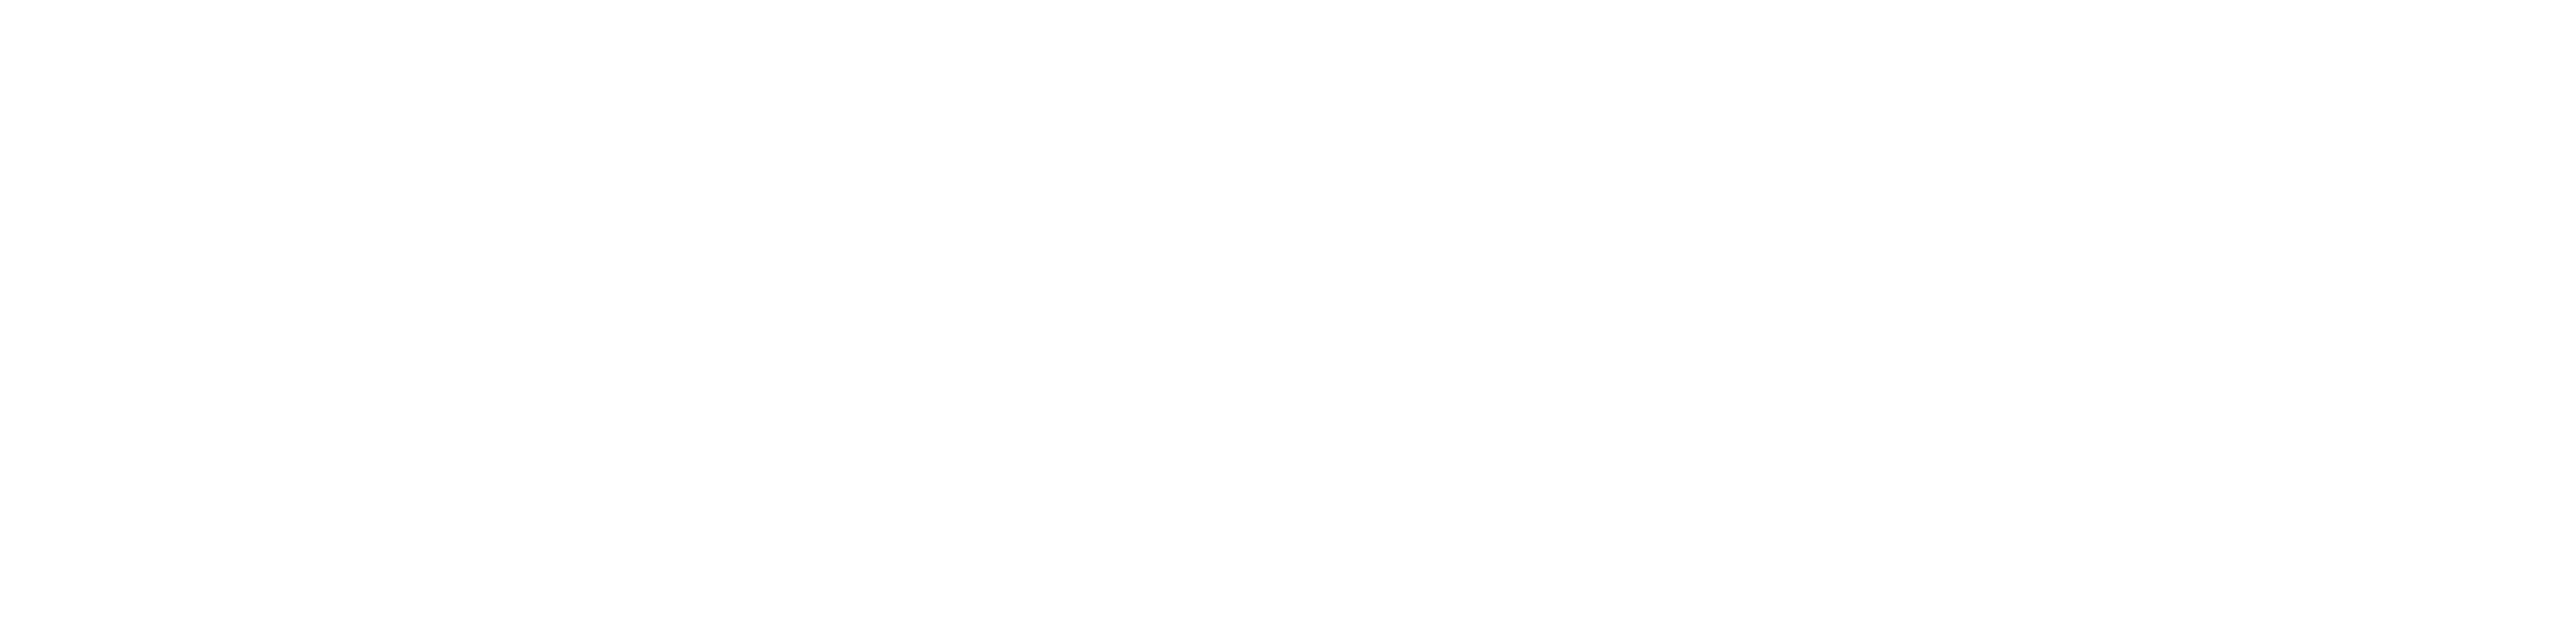 Liberale Hochschulgruppe Kassel